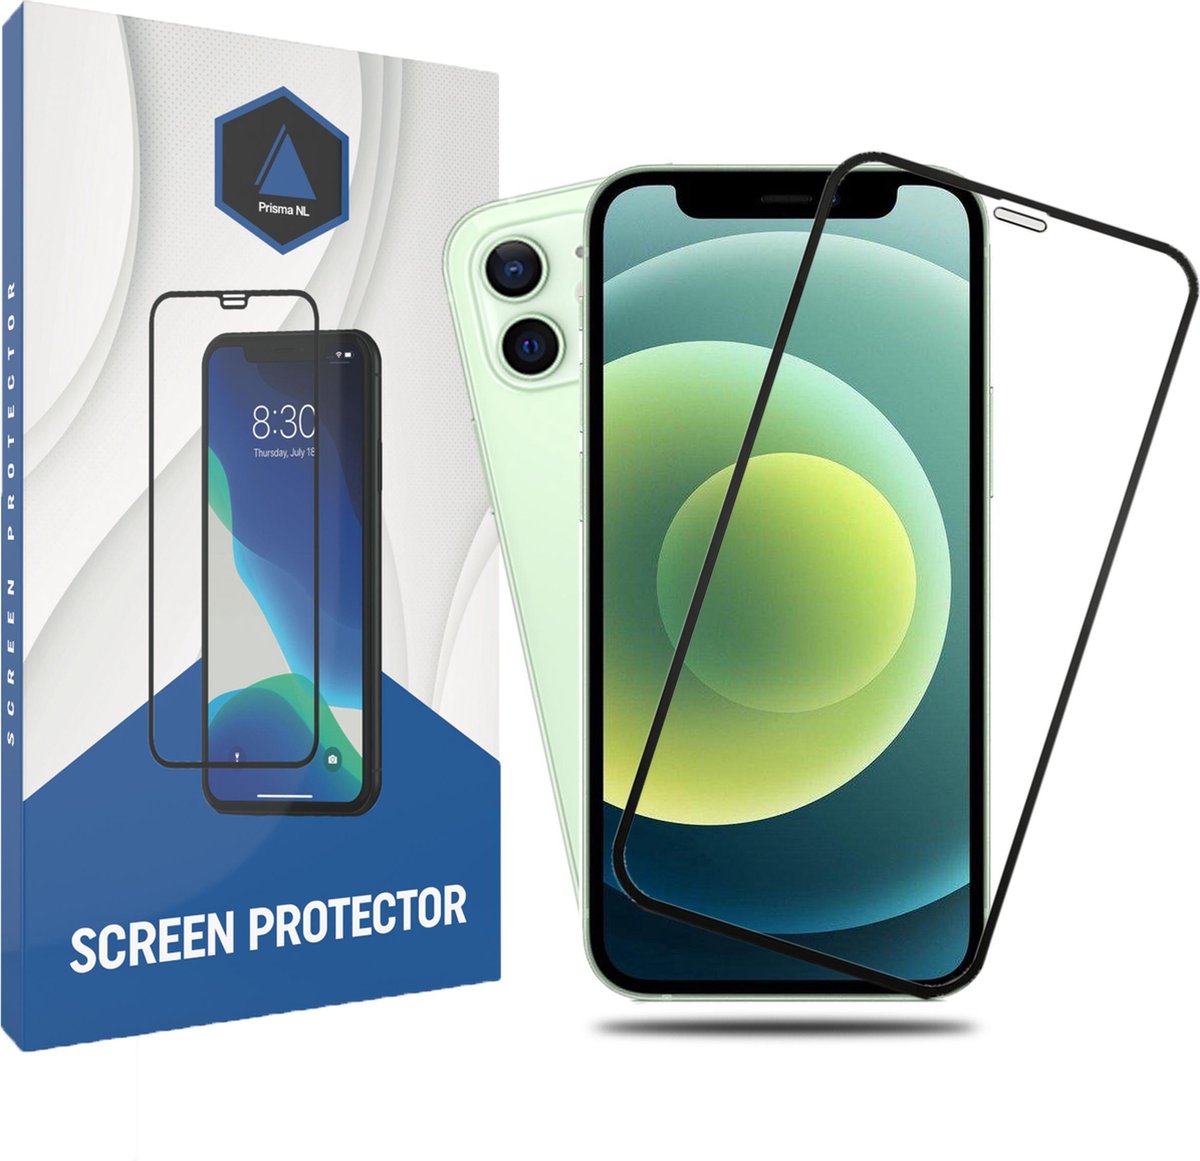 Prisma NL® iPhone Screenprotector voor iPhone 12 Pro & iPhone 12 - Premium - Beschermglas - Gehard glas - 9H - Zwarte rand - Tempered Glass - Full cover